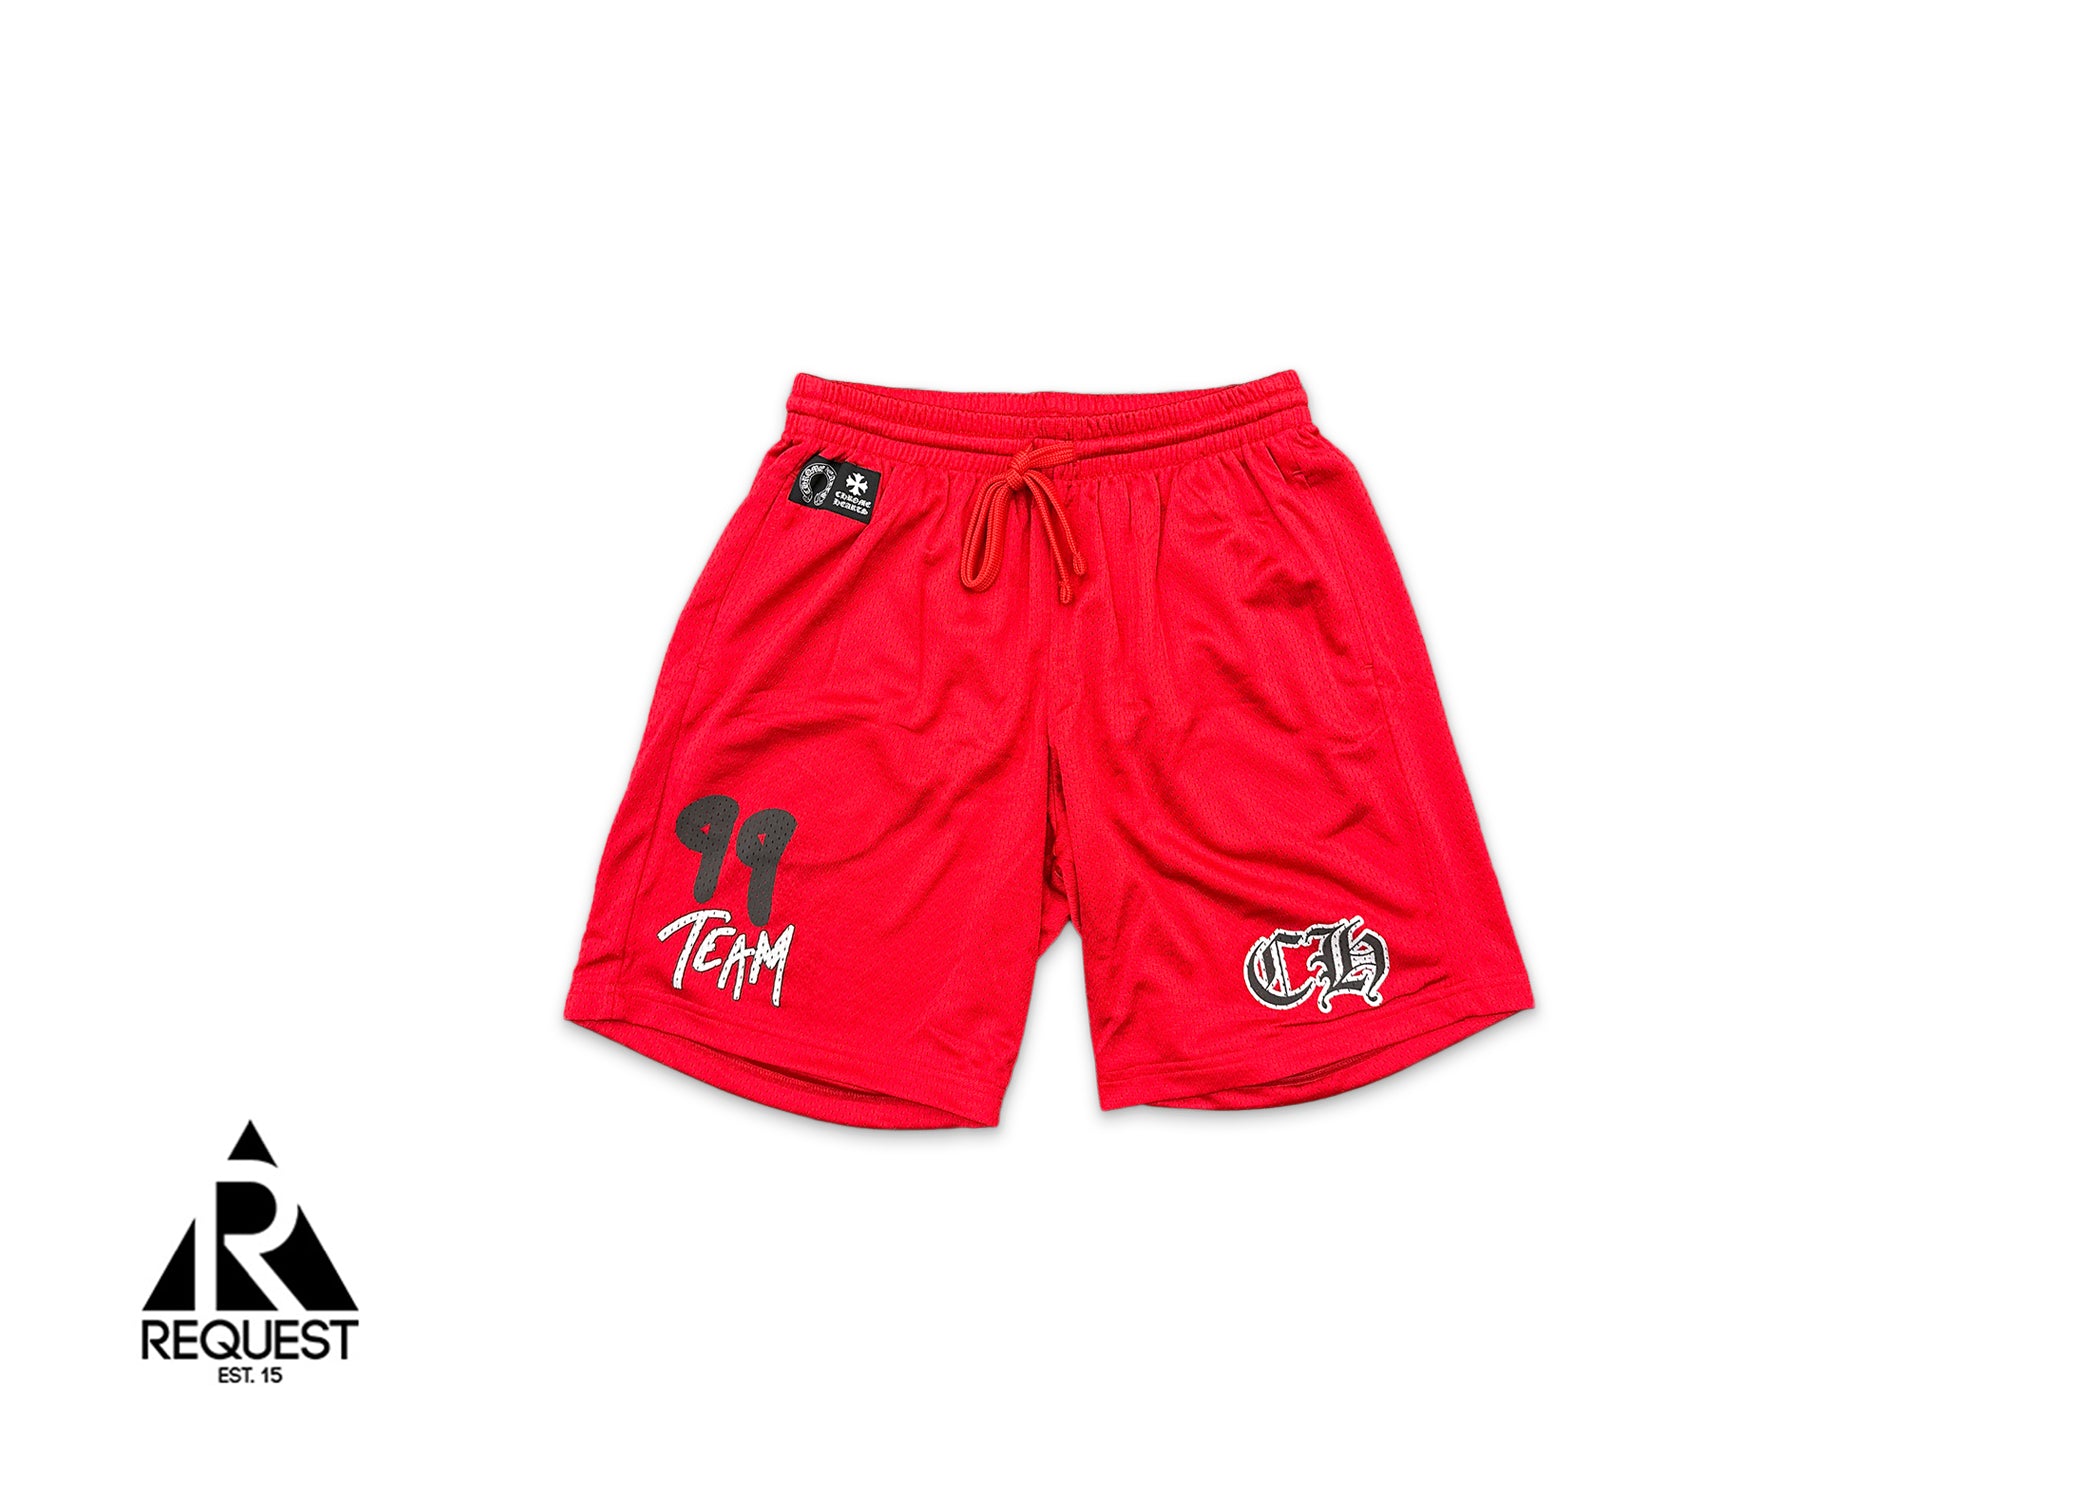 Chrome Hearts Matty Boy Sports Mesh Varsity Shorts “Red”